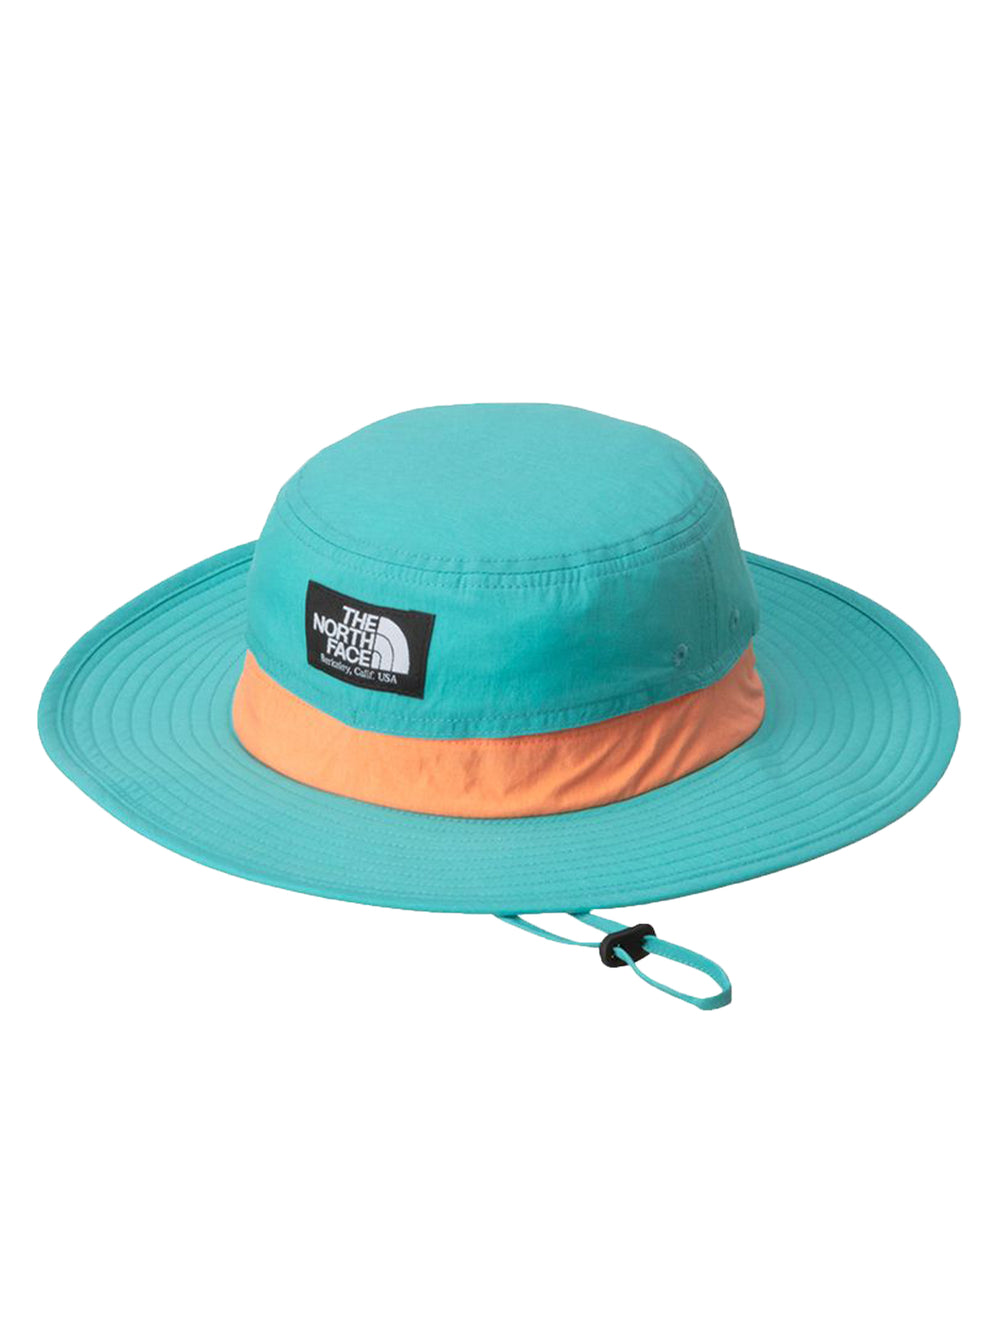 [THE NORTH FACE] キッズ ホライズンハット 帽子 / ノースフェイス キッズ 子供用 帽子 UVカット 紫外線対策 日焼け NNJ02312 24SS [A] 20_1